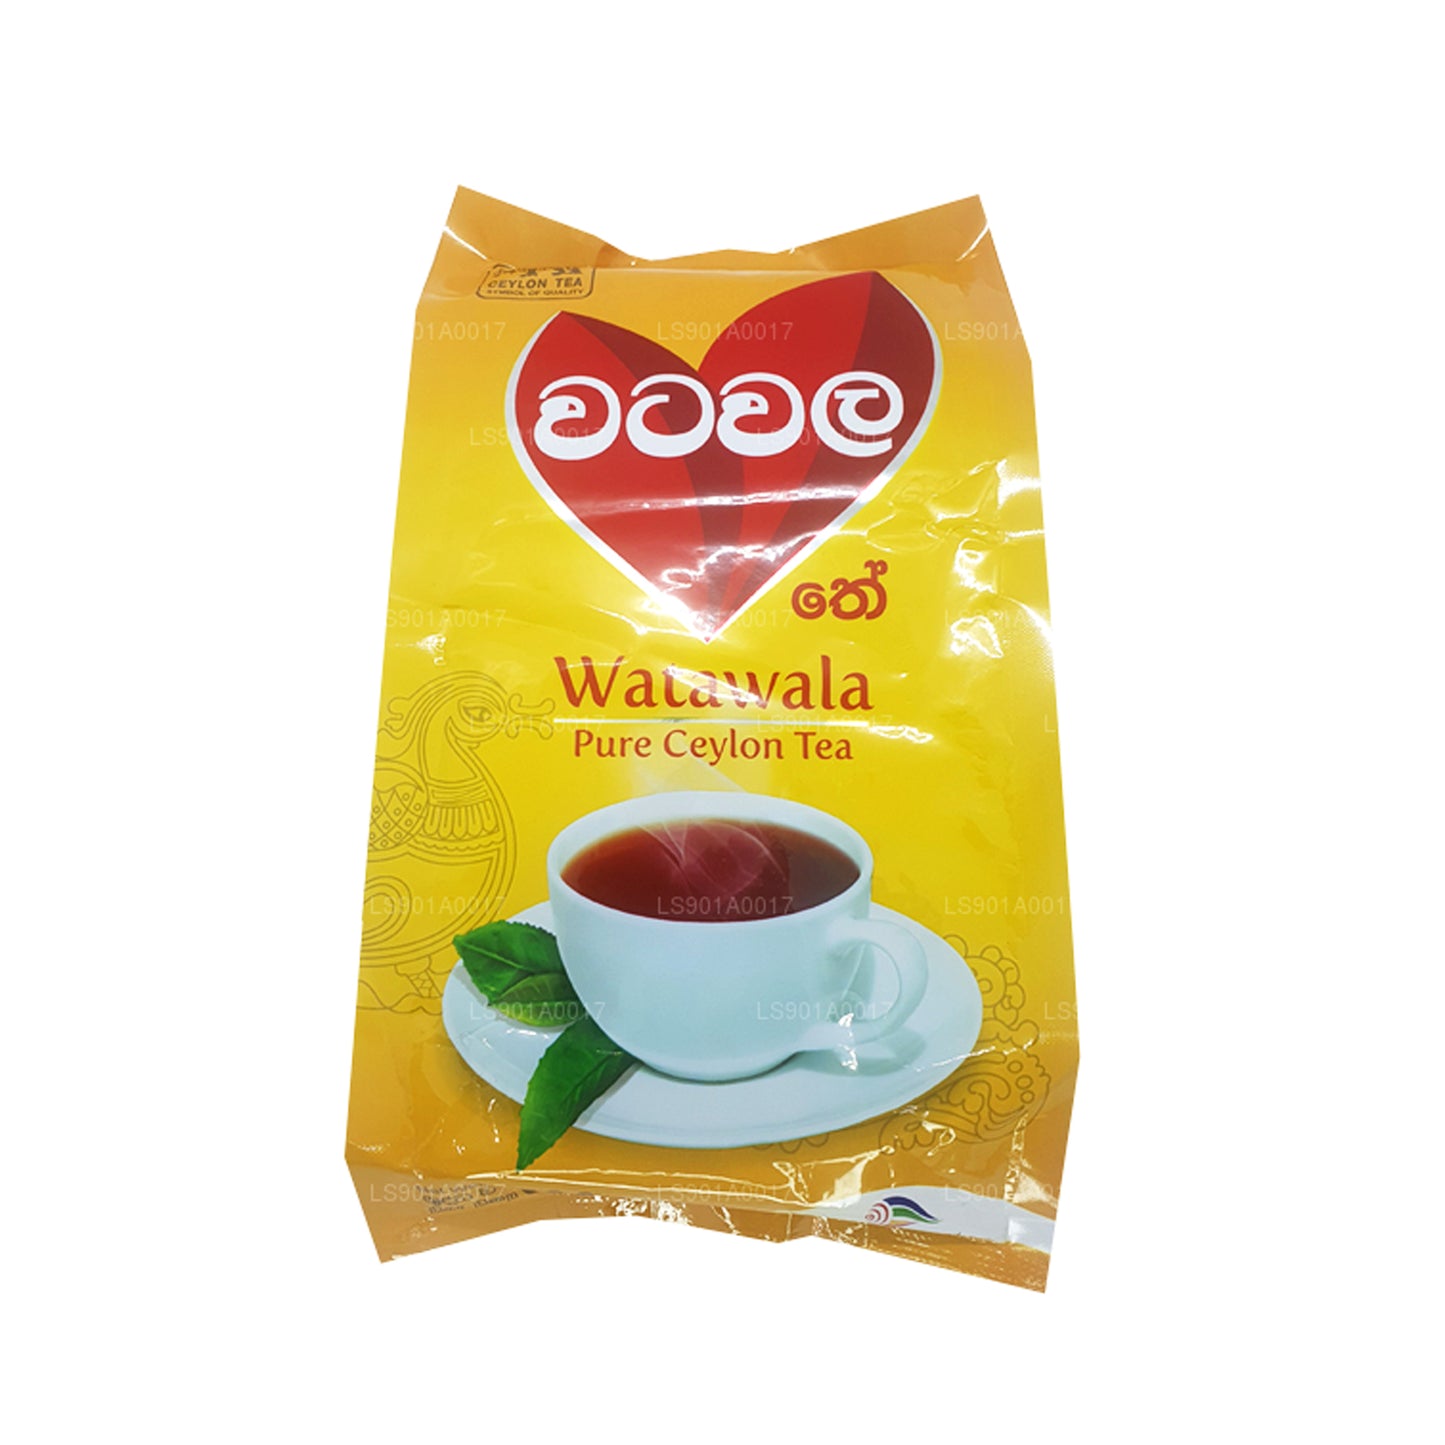 Watawala Pure Ceylon Tea (500g)